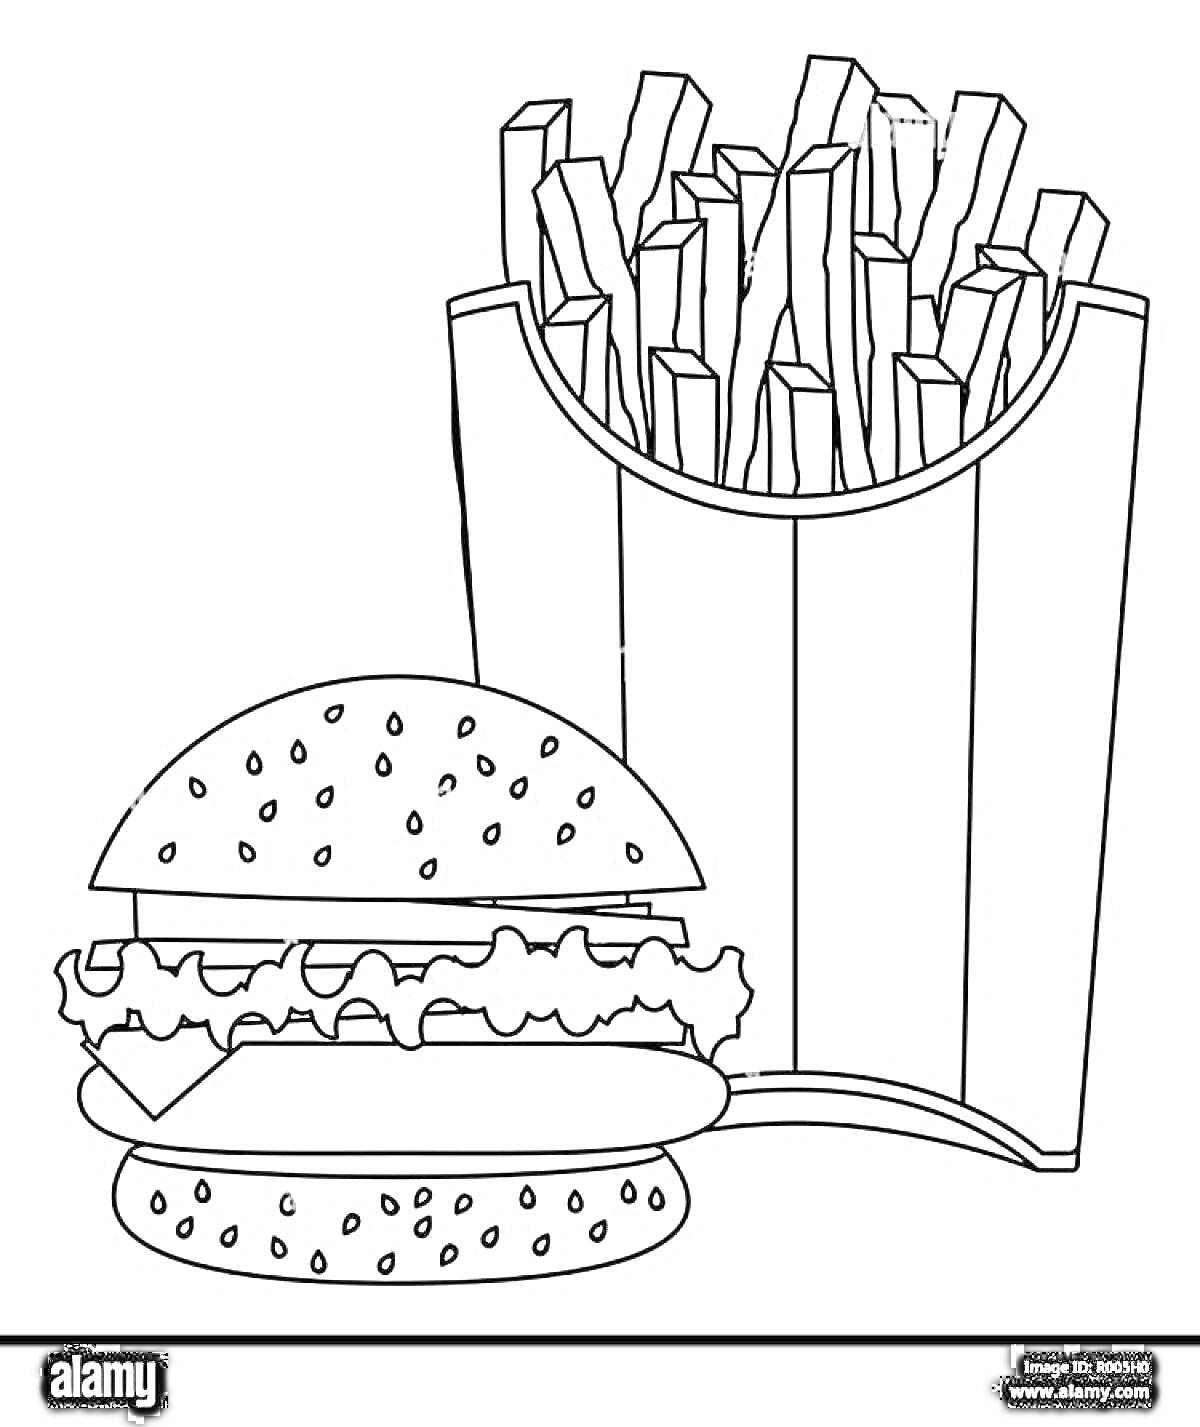 Раскраска Раскраска: картошка фри и бургер